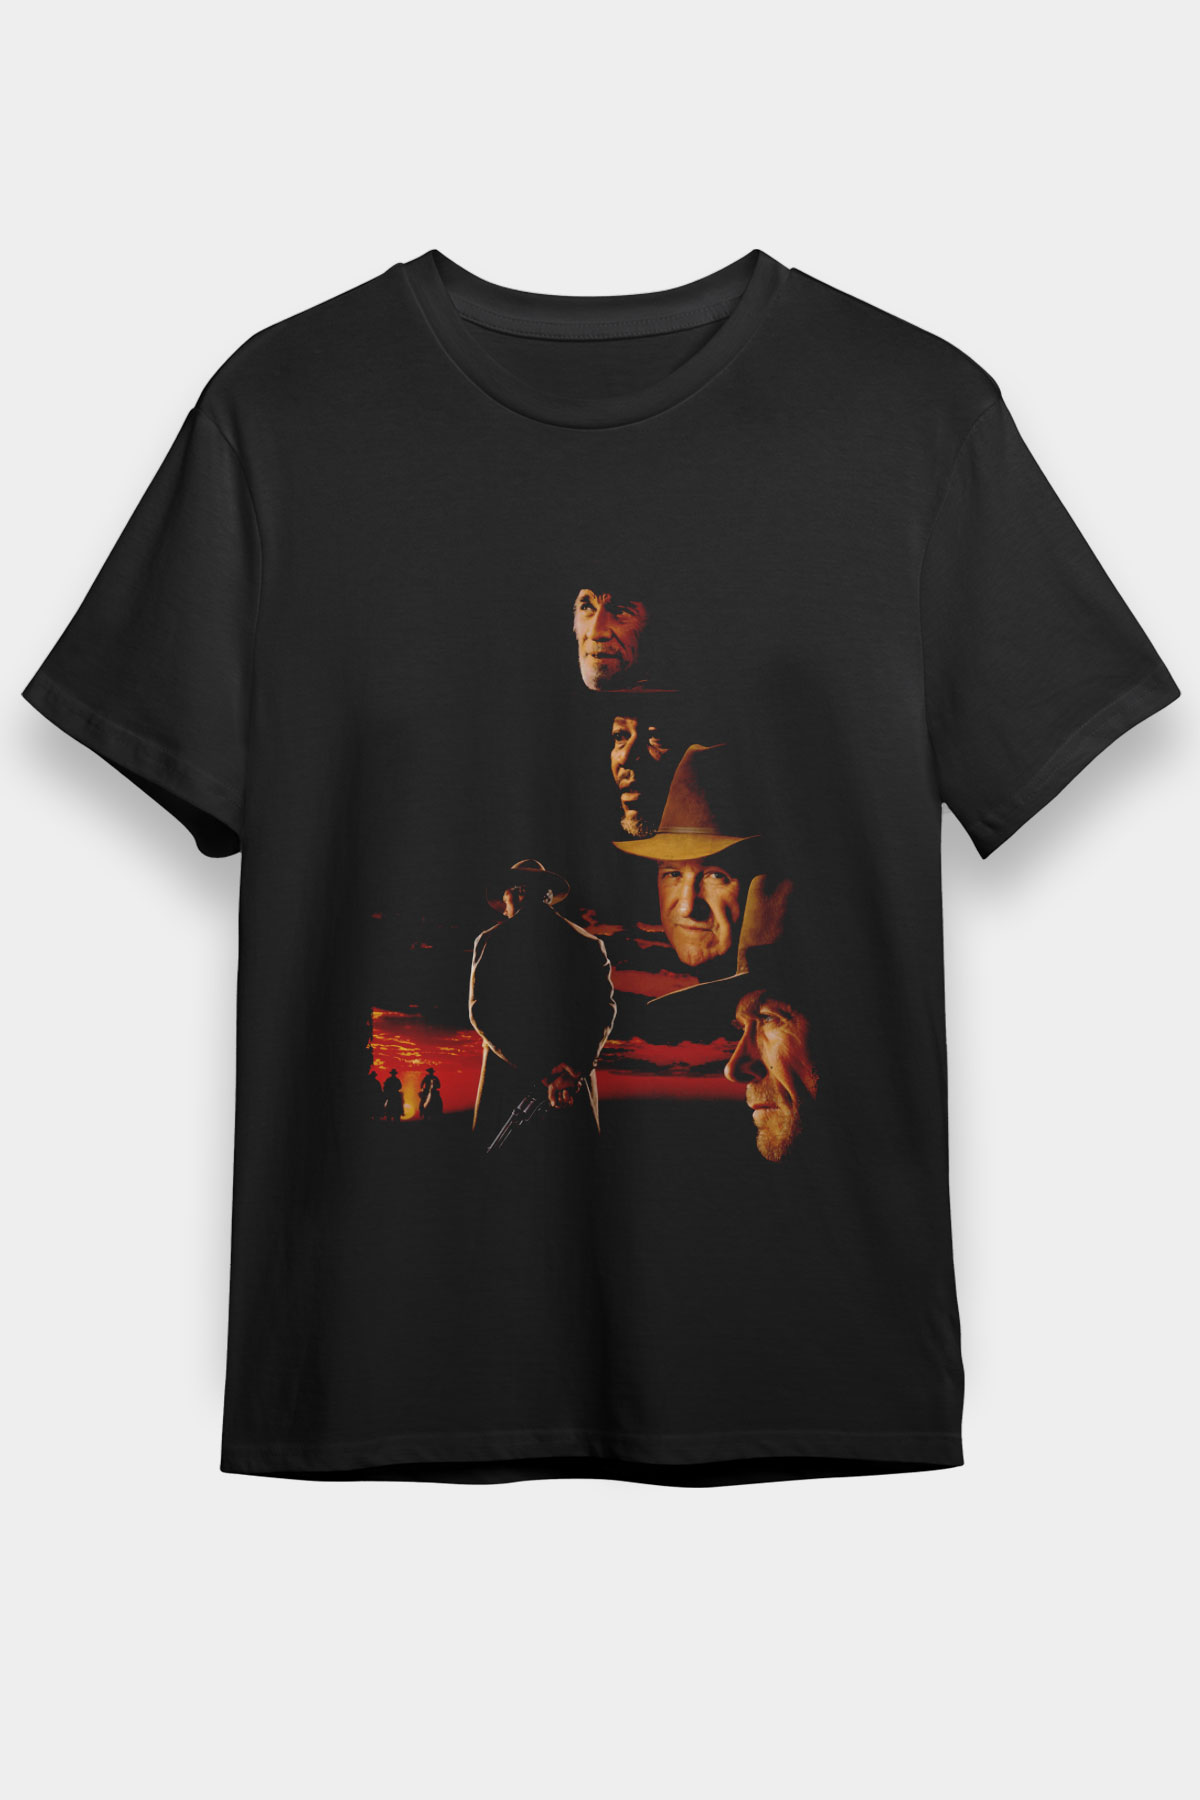 Unforgiven T shirt,Movie , Tv and Games Tshirt